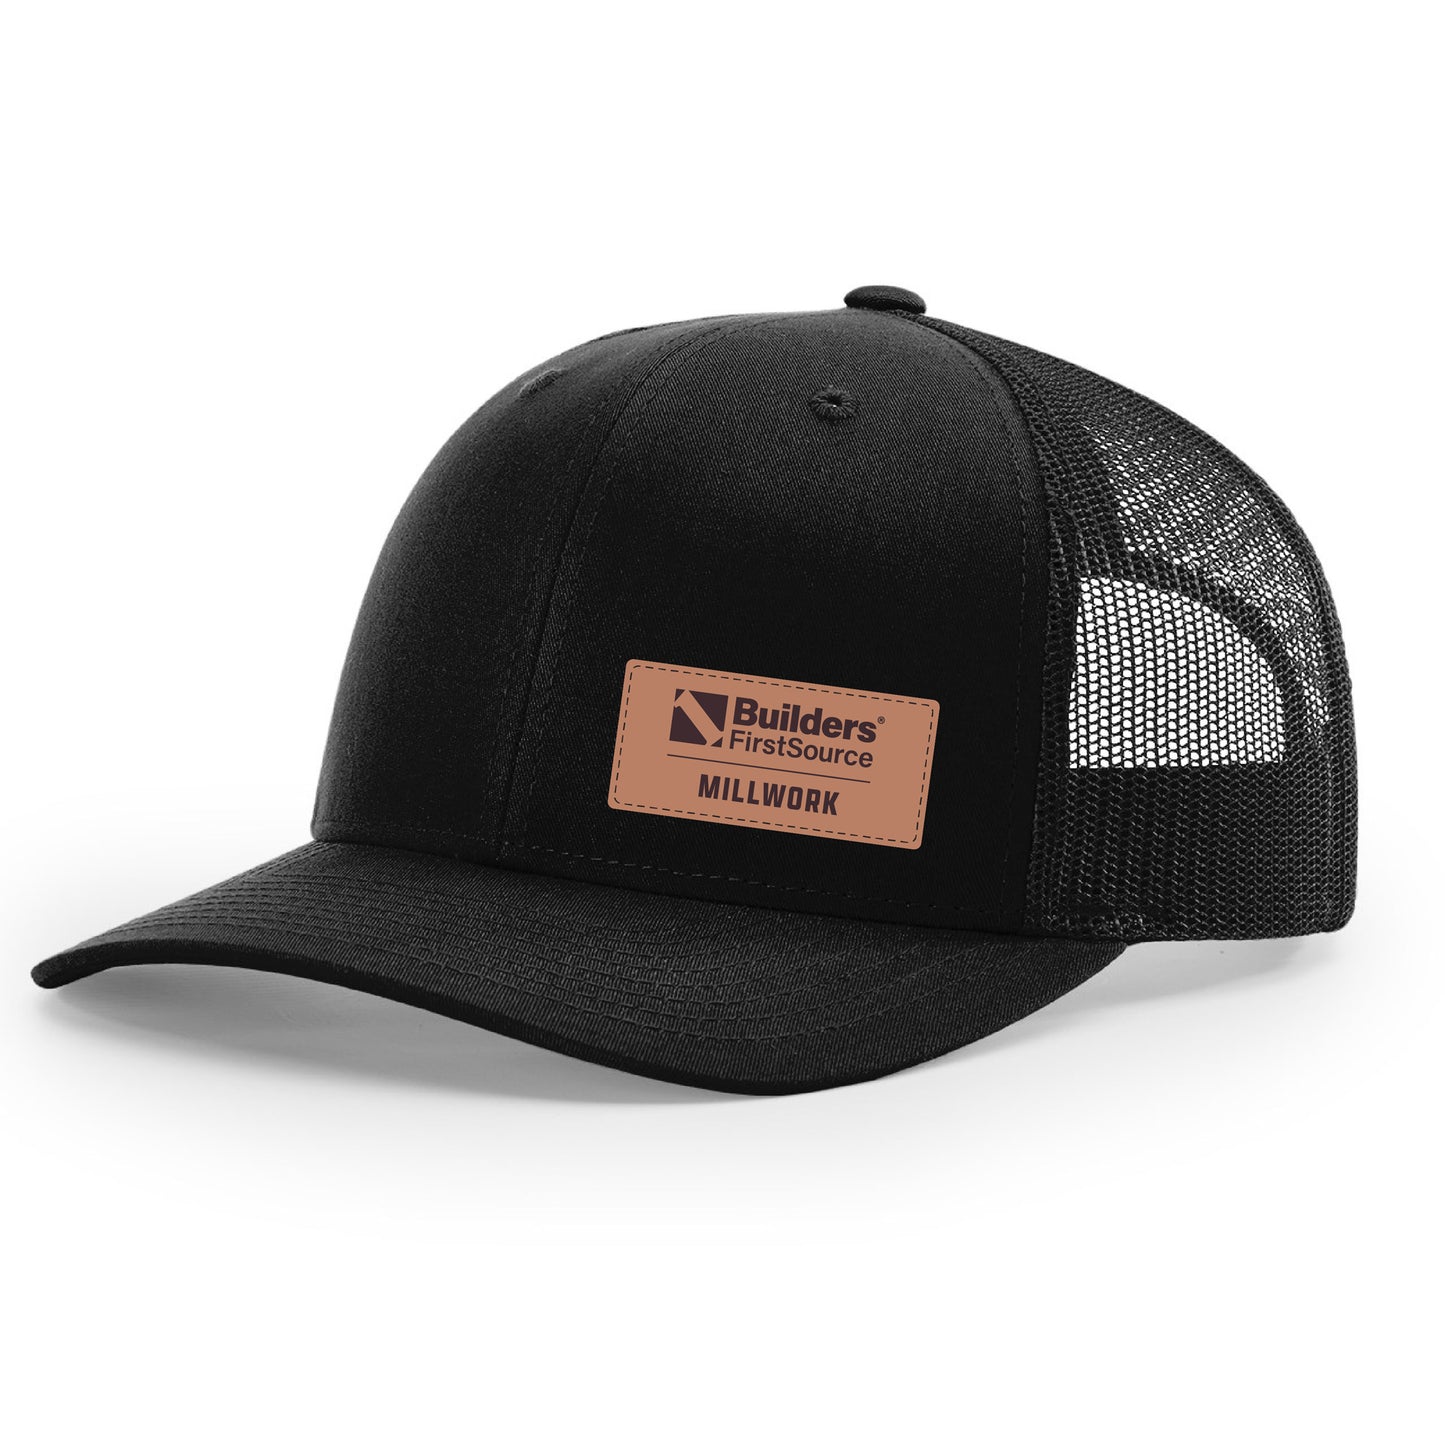 Millwork - Richardson Snapback Trucker Hat